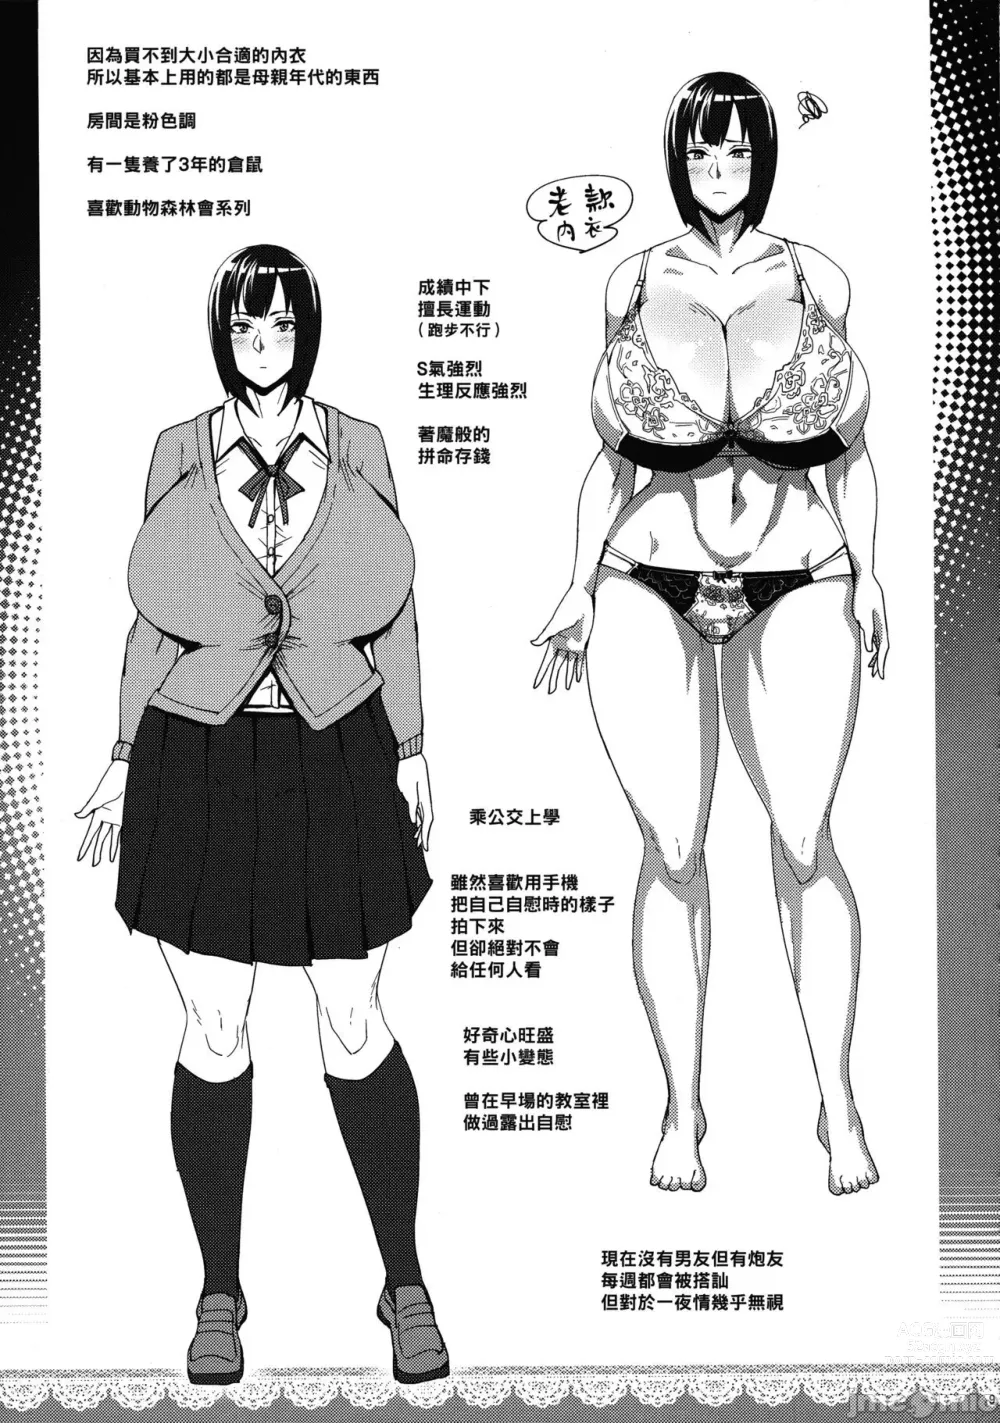 Page 8 of manga Minami-san Sensational